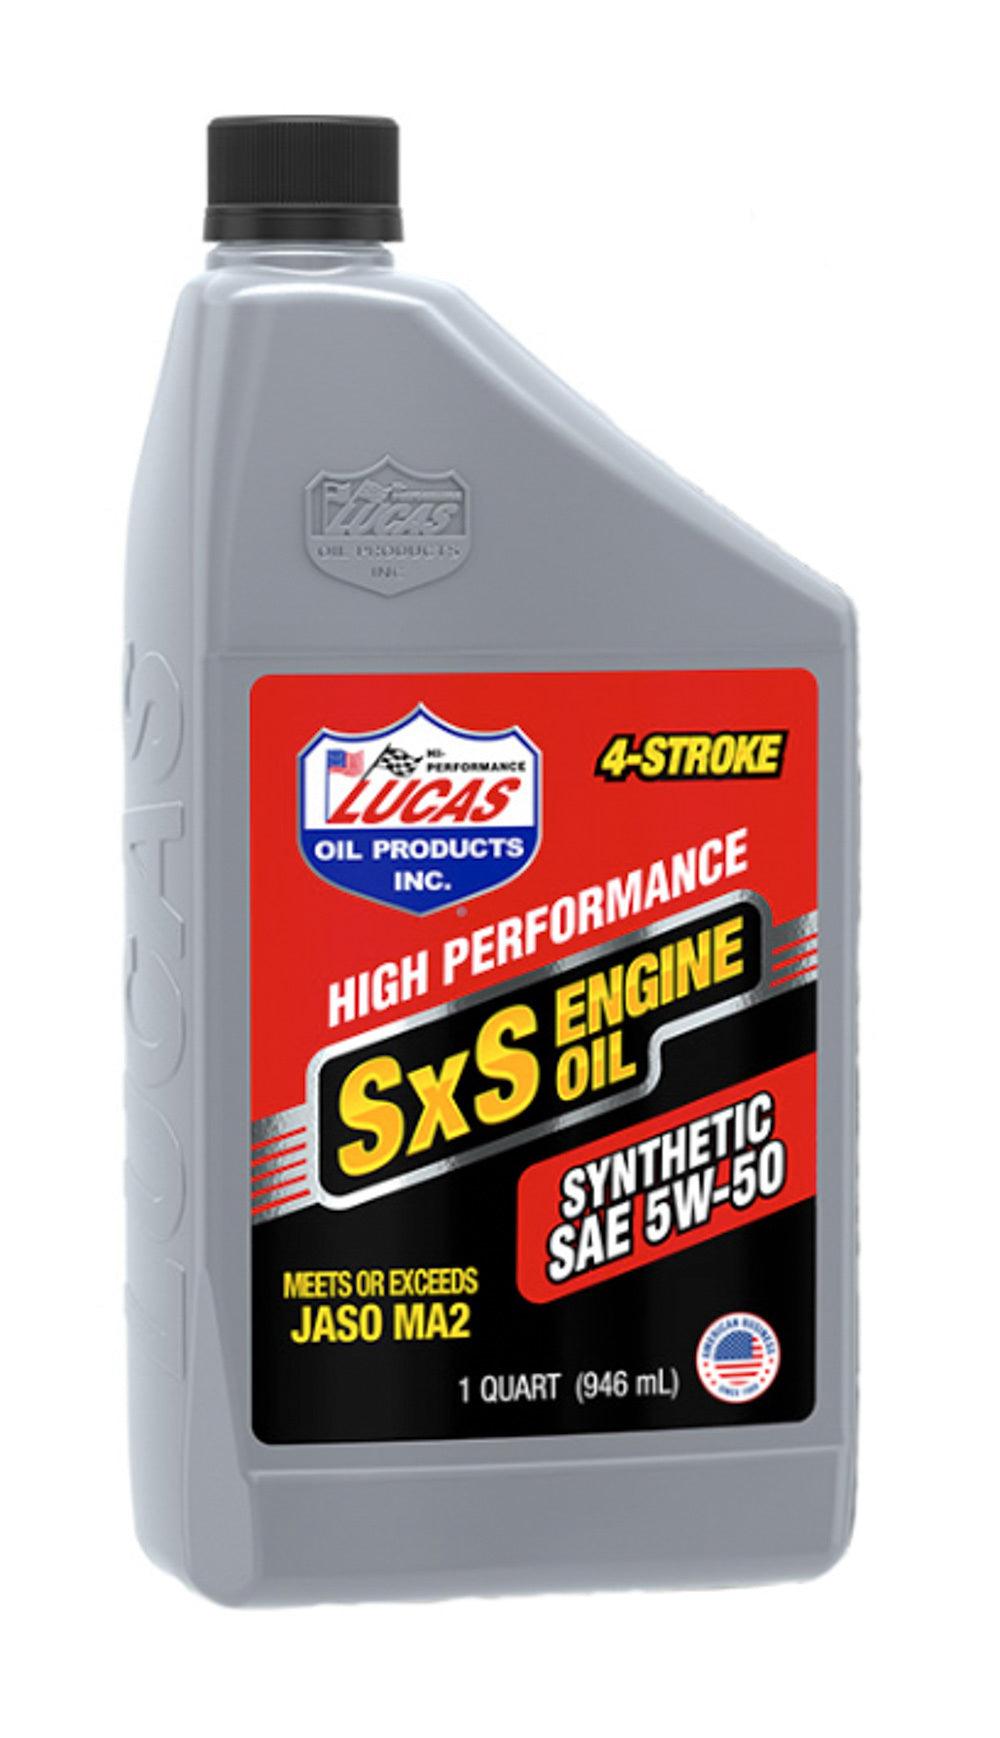 Synthetic 5w50 SXS Oil 1 Quart - Burlile Performance Products